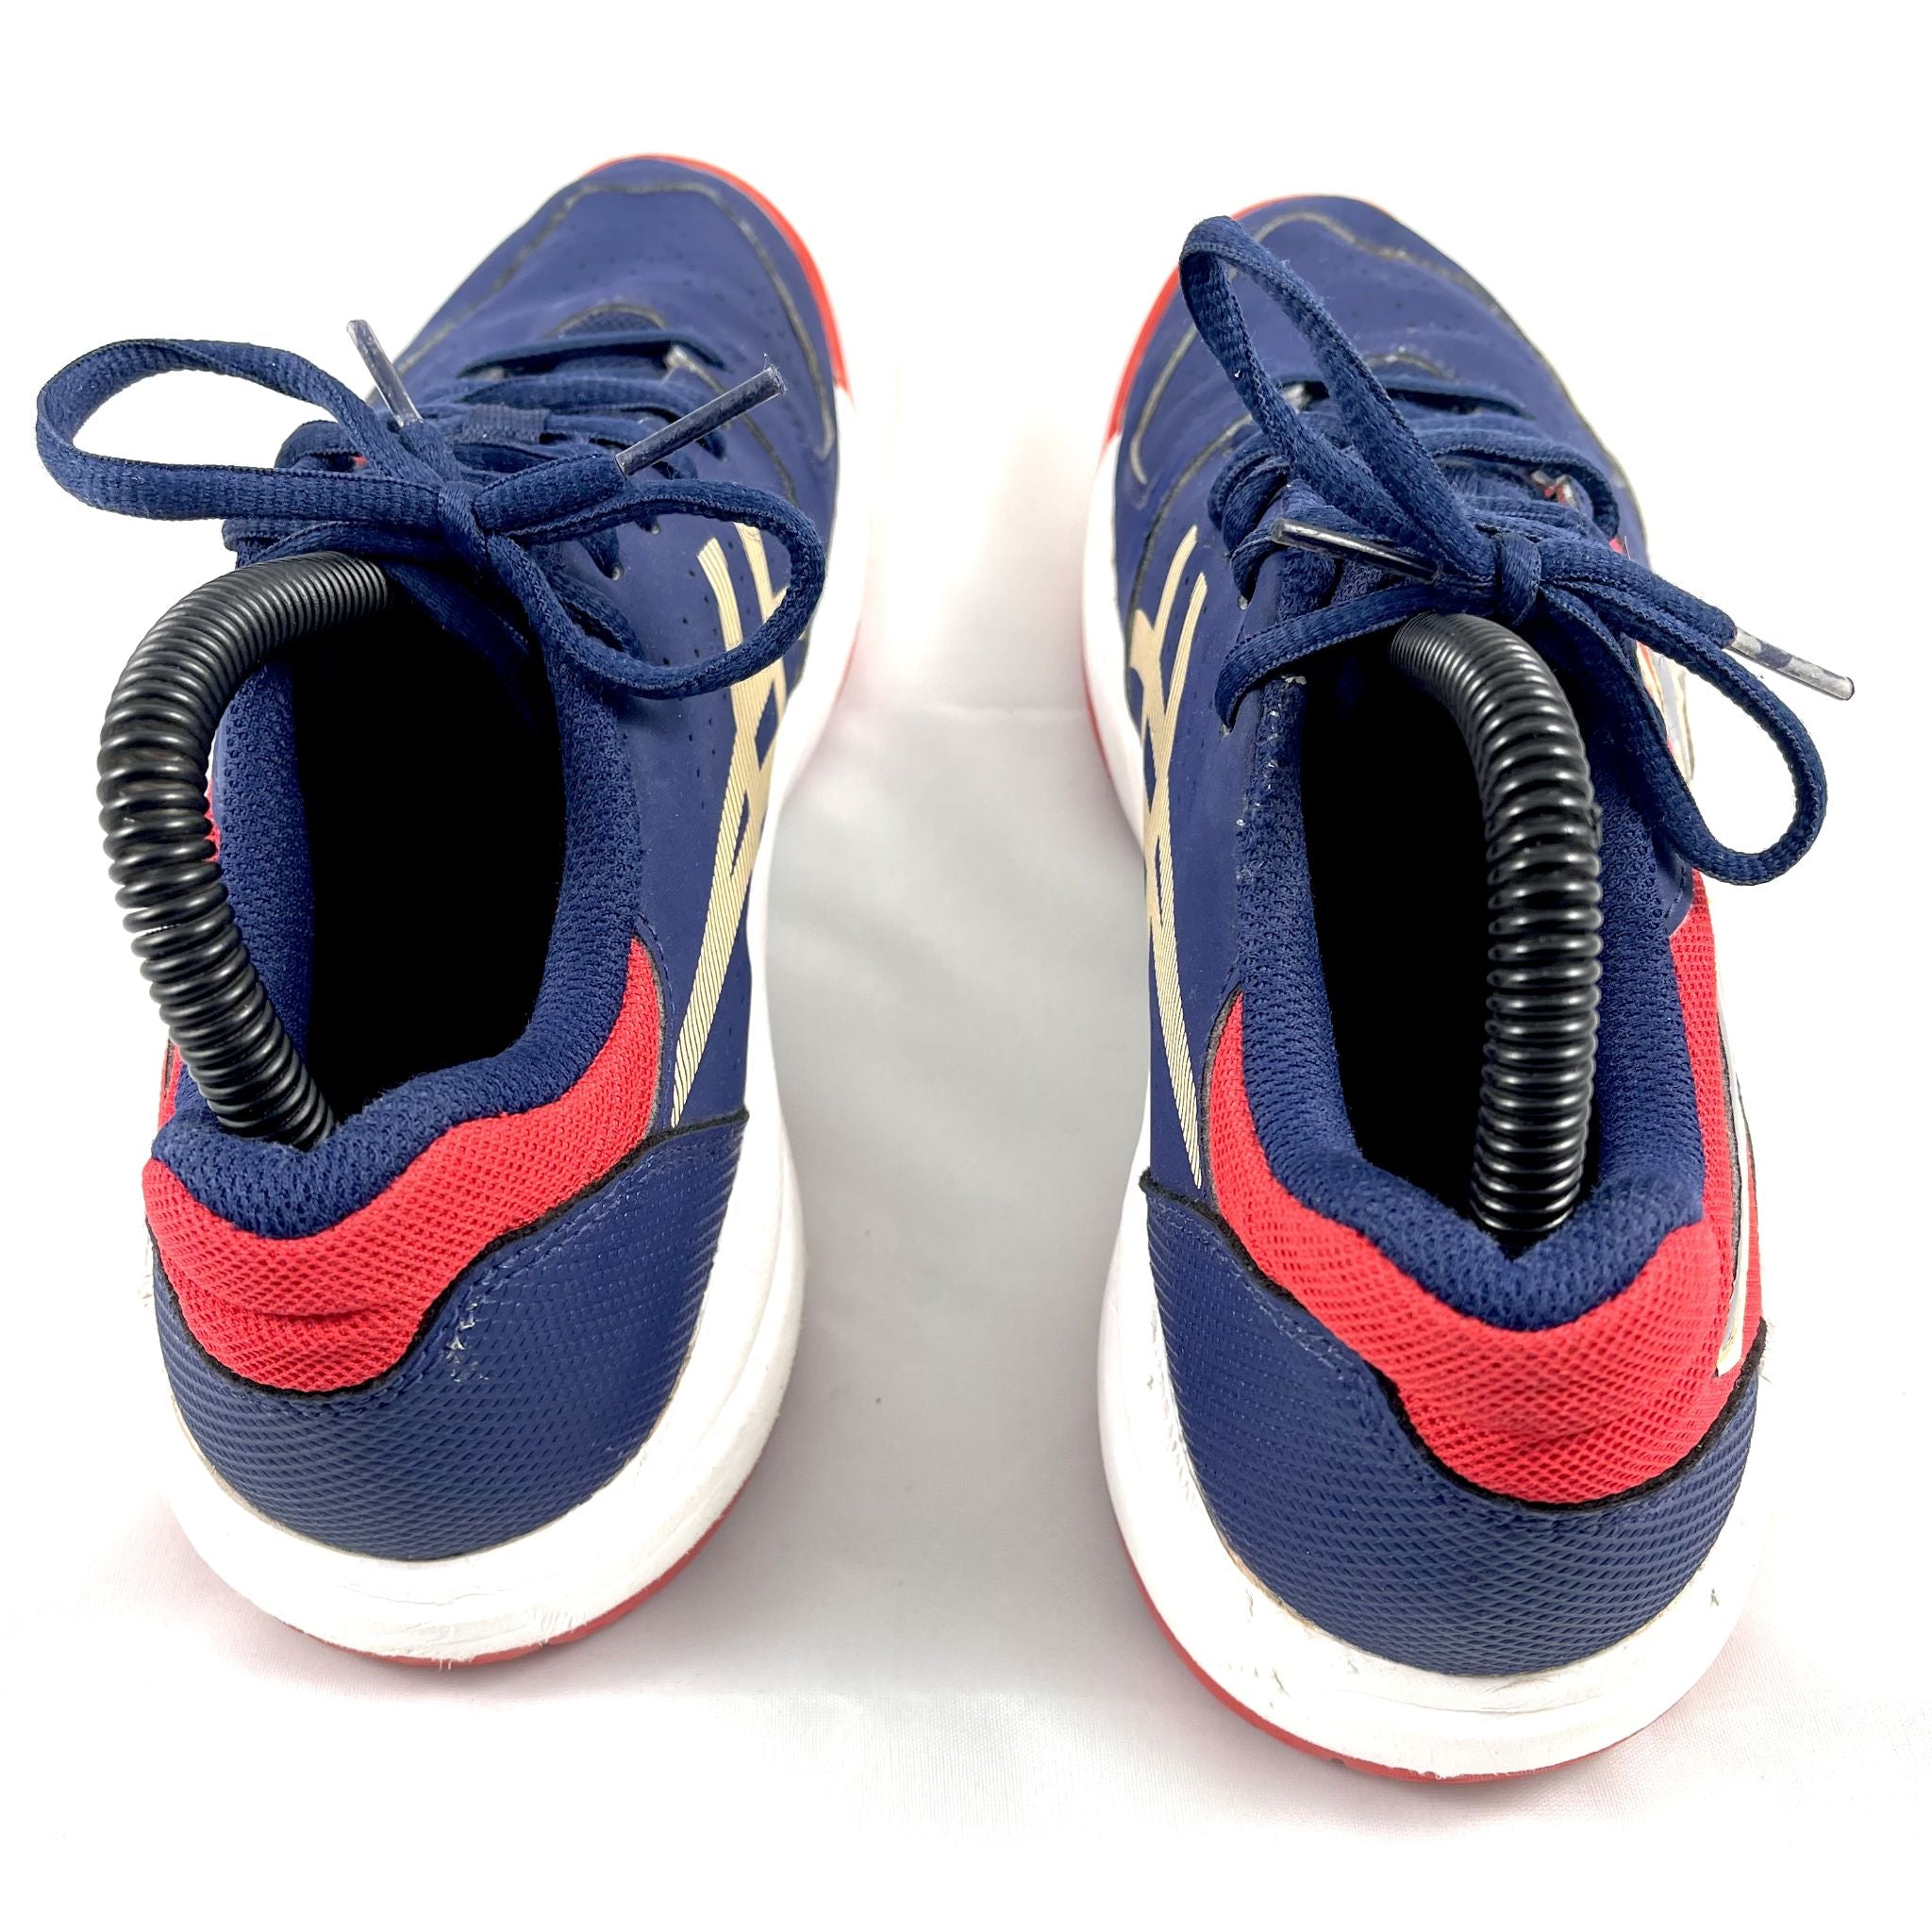 Blue Asics Shoes Original Imported